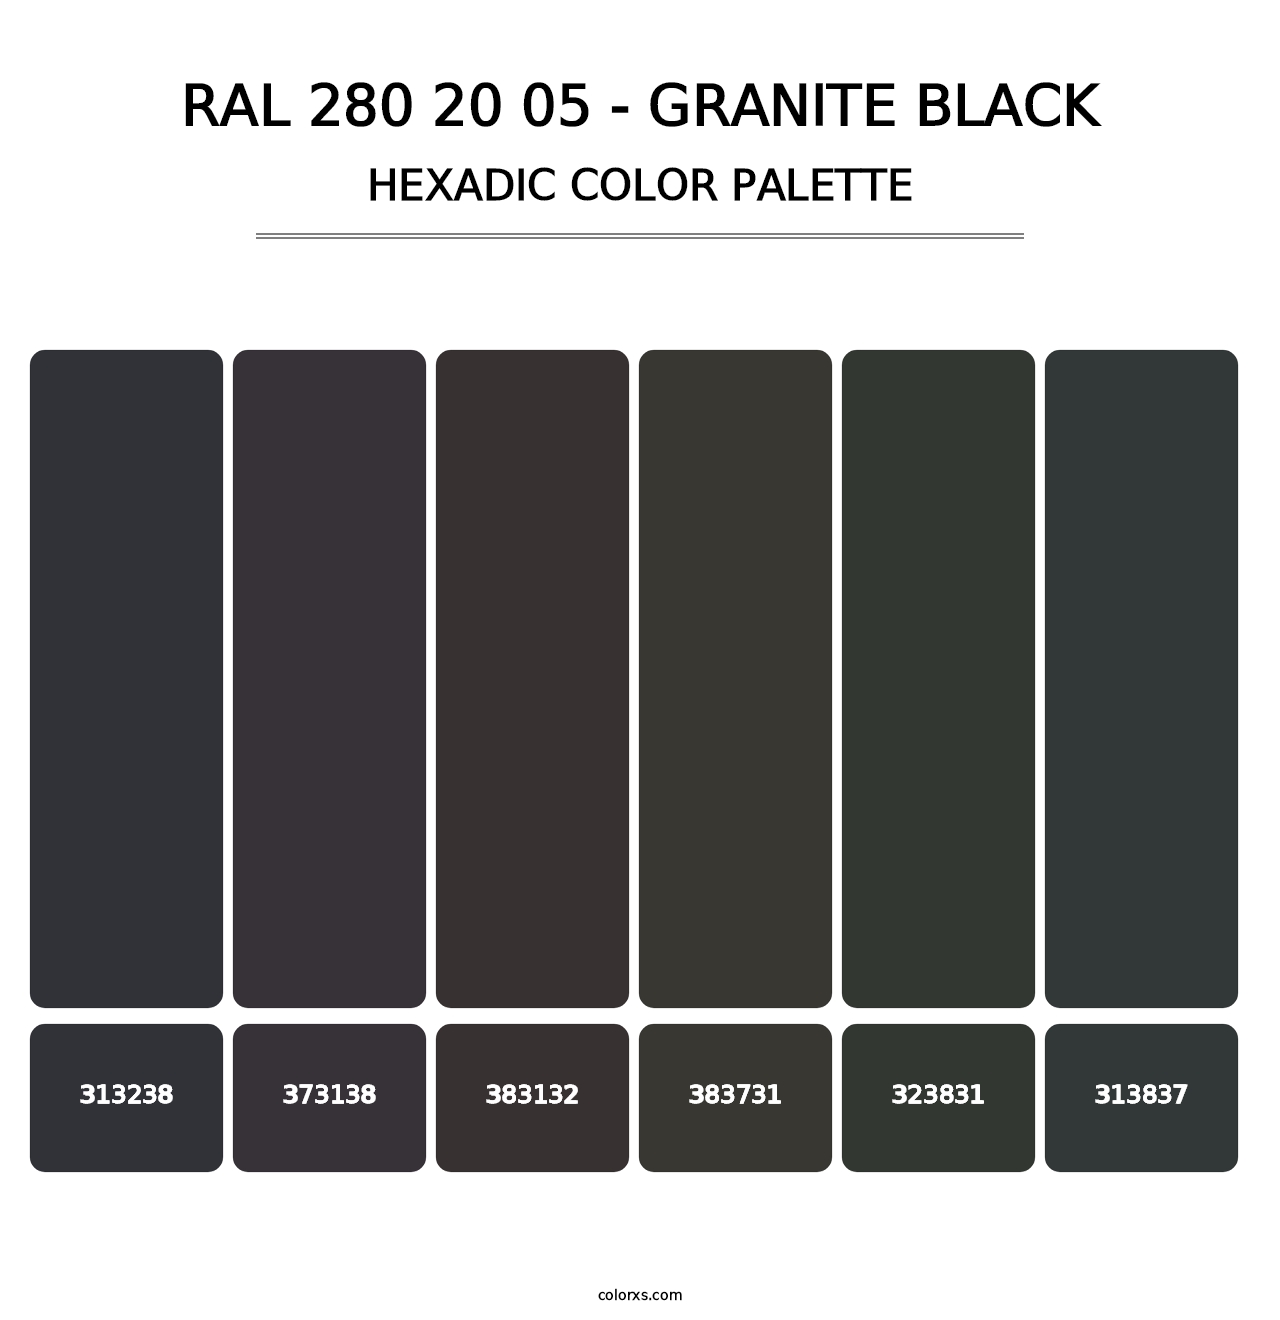 RAL 280 20 05 - Granite Black - Hexadic Color Palette